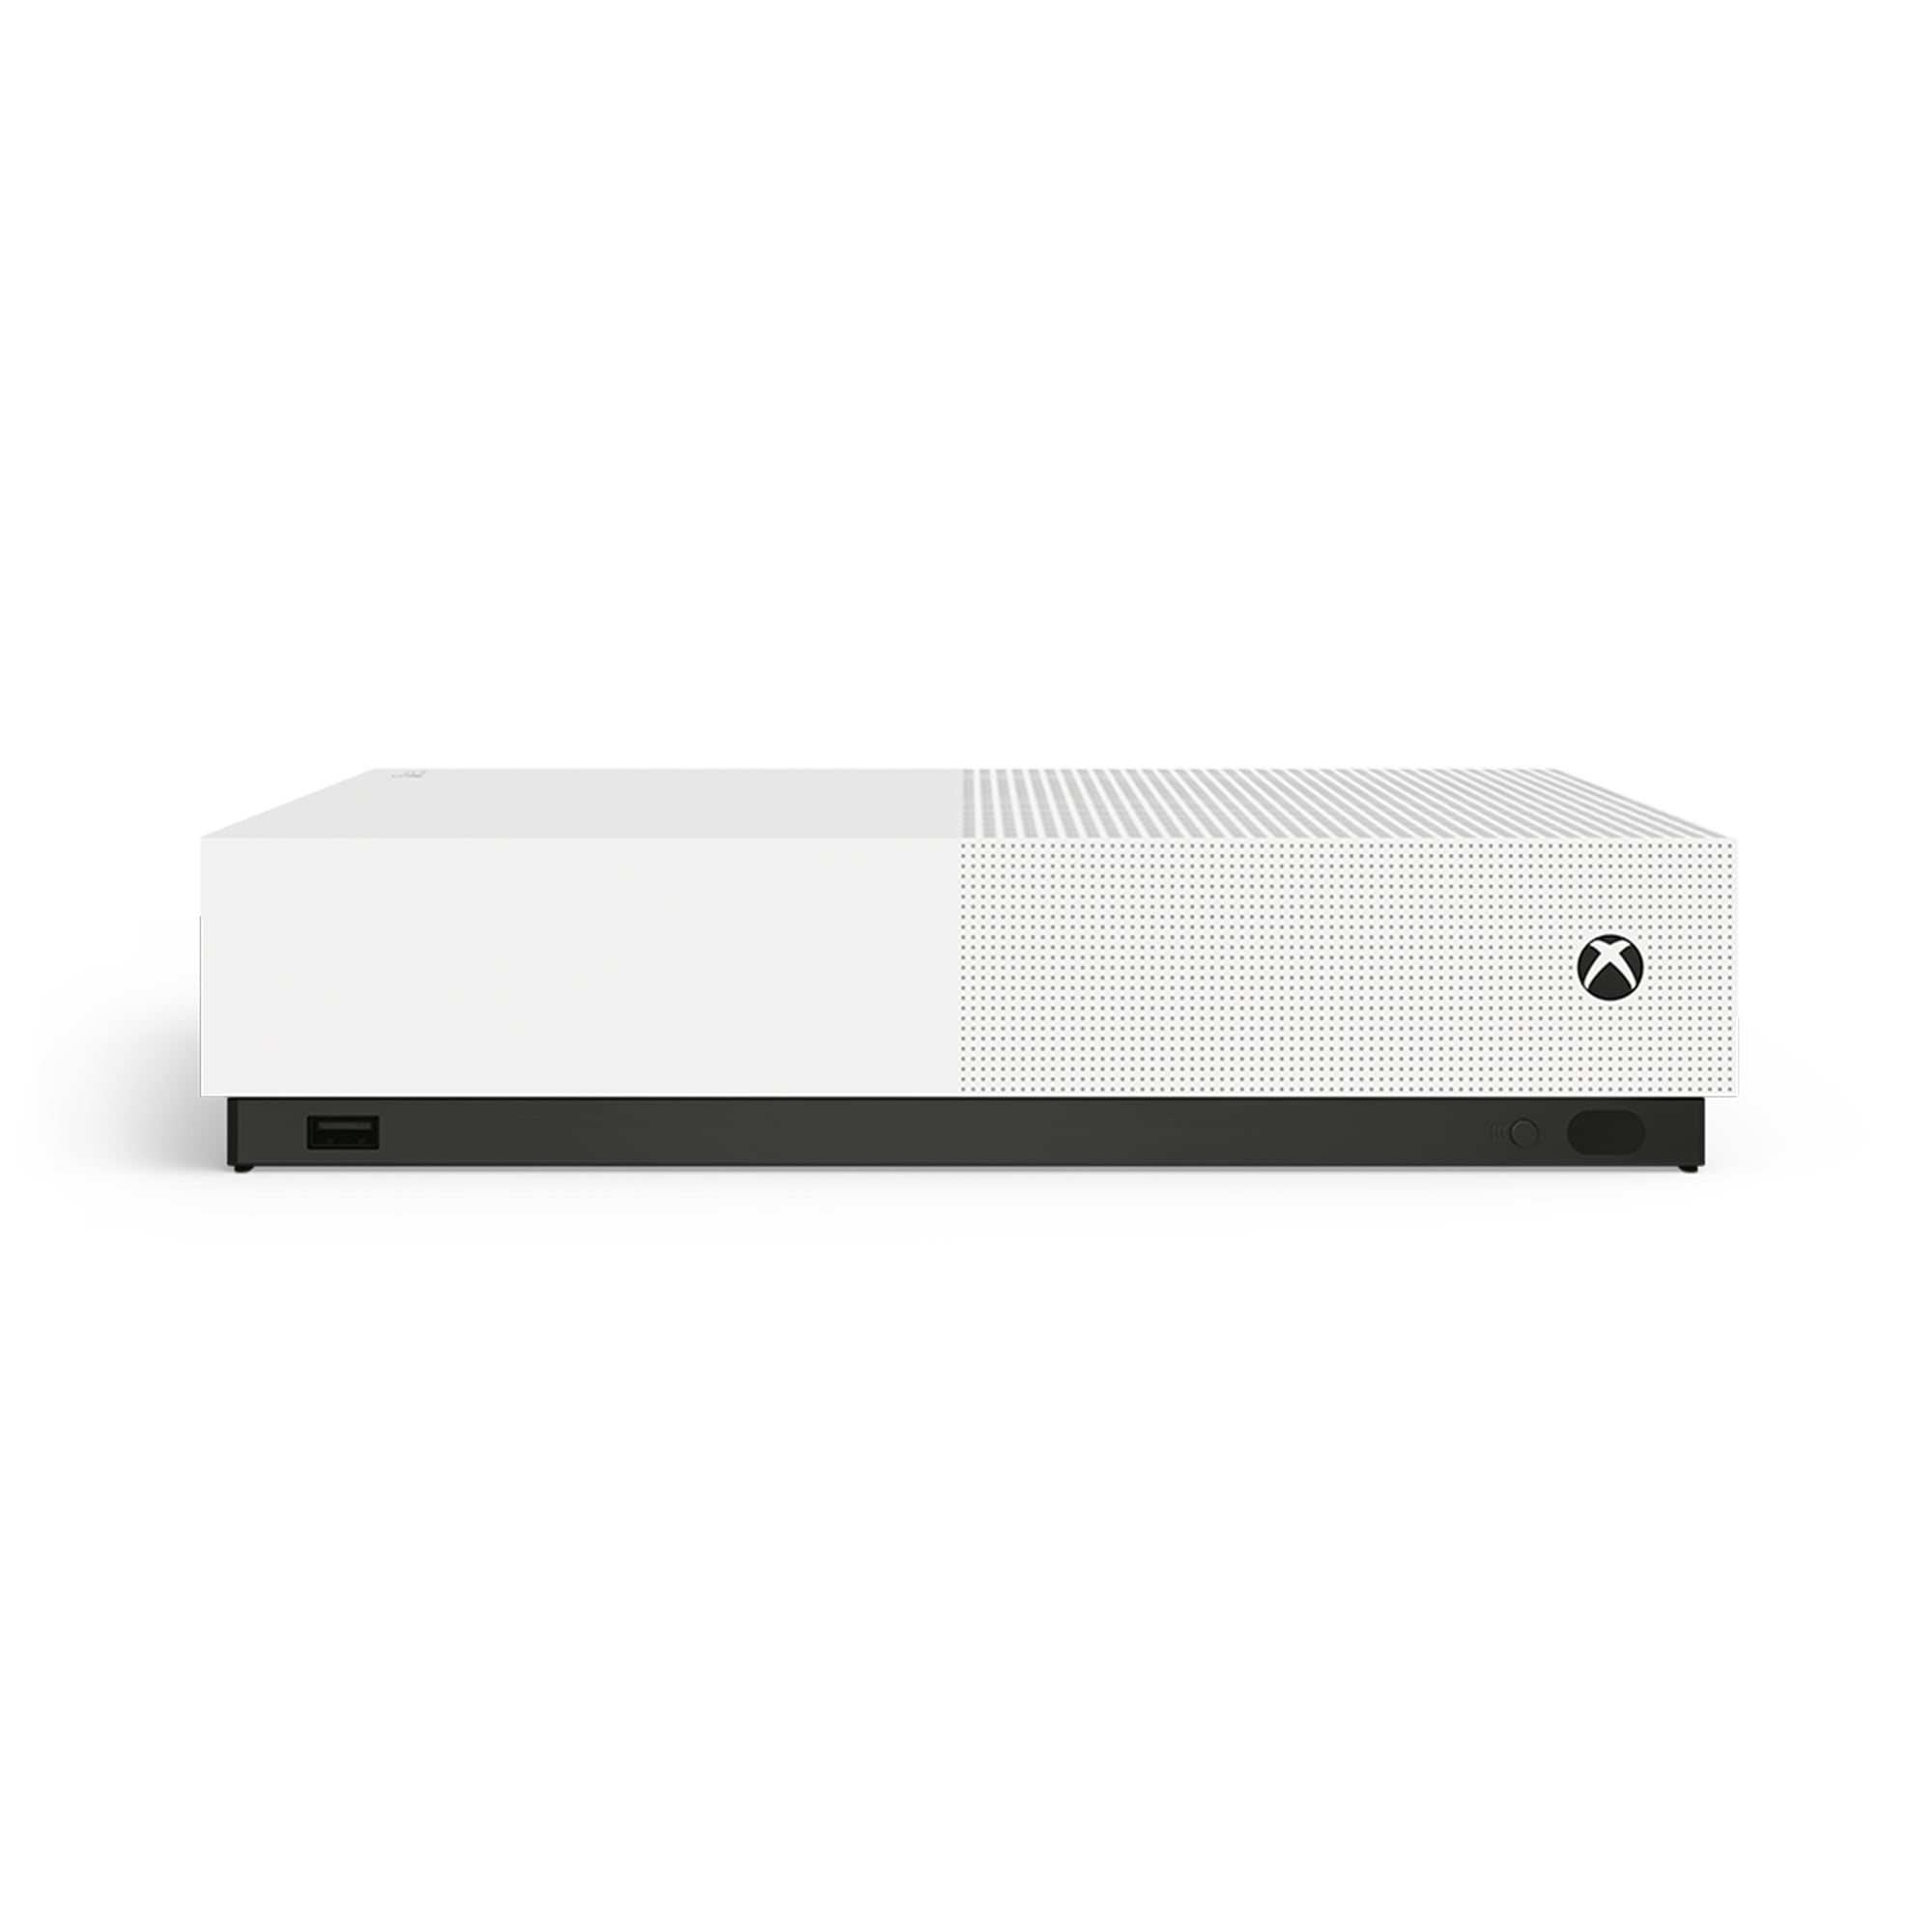 Microsoft Xbox One S 1TB All Digital Edition 3 Game Bundle Disc